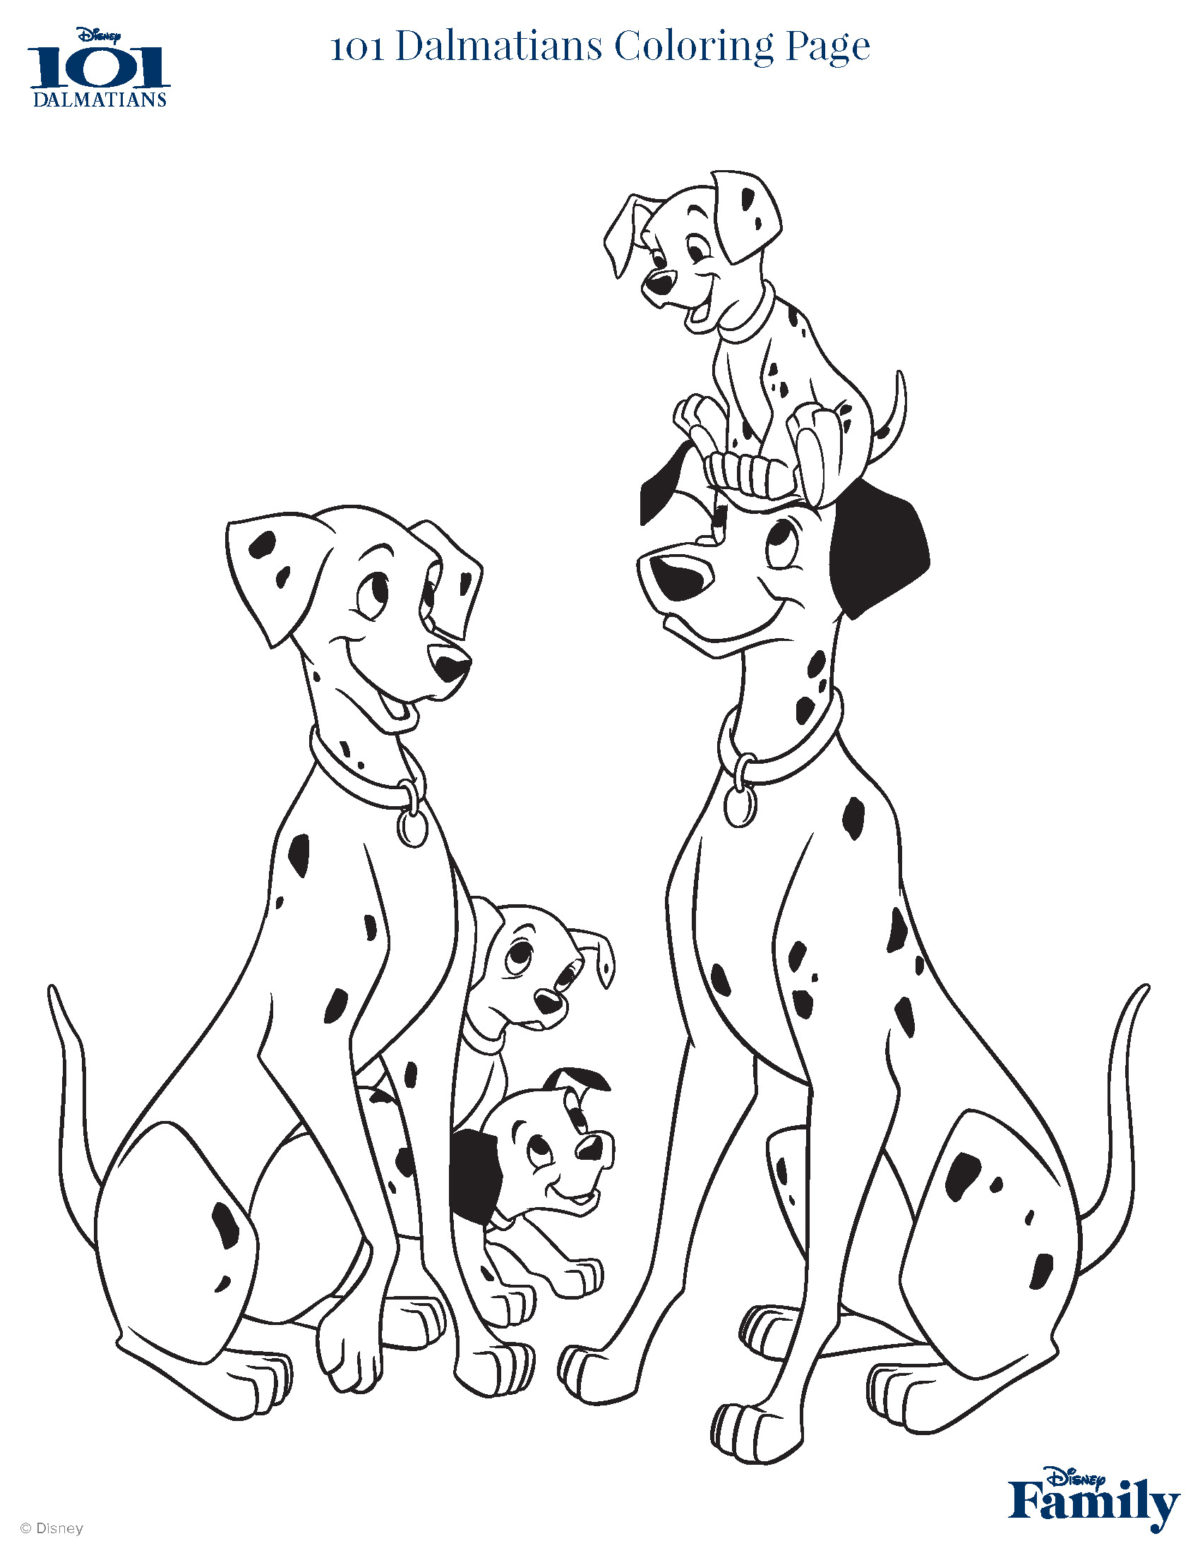 Disney.com Coloring Pages 101 Dalmatians Coloring Page Disney Family